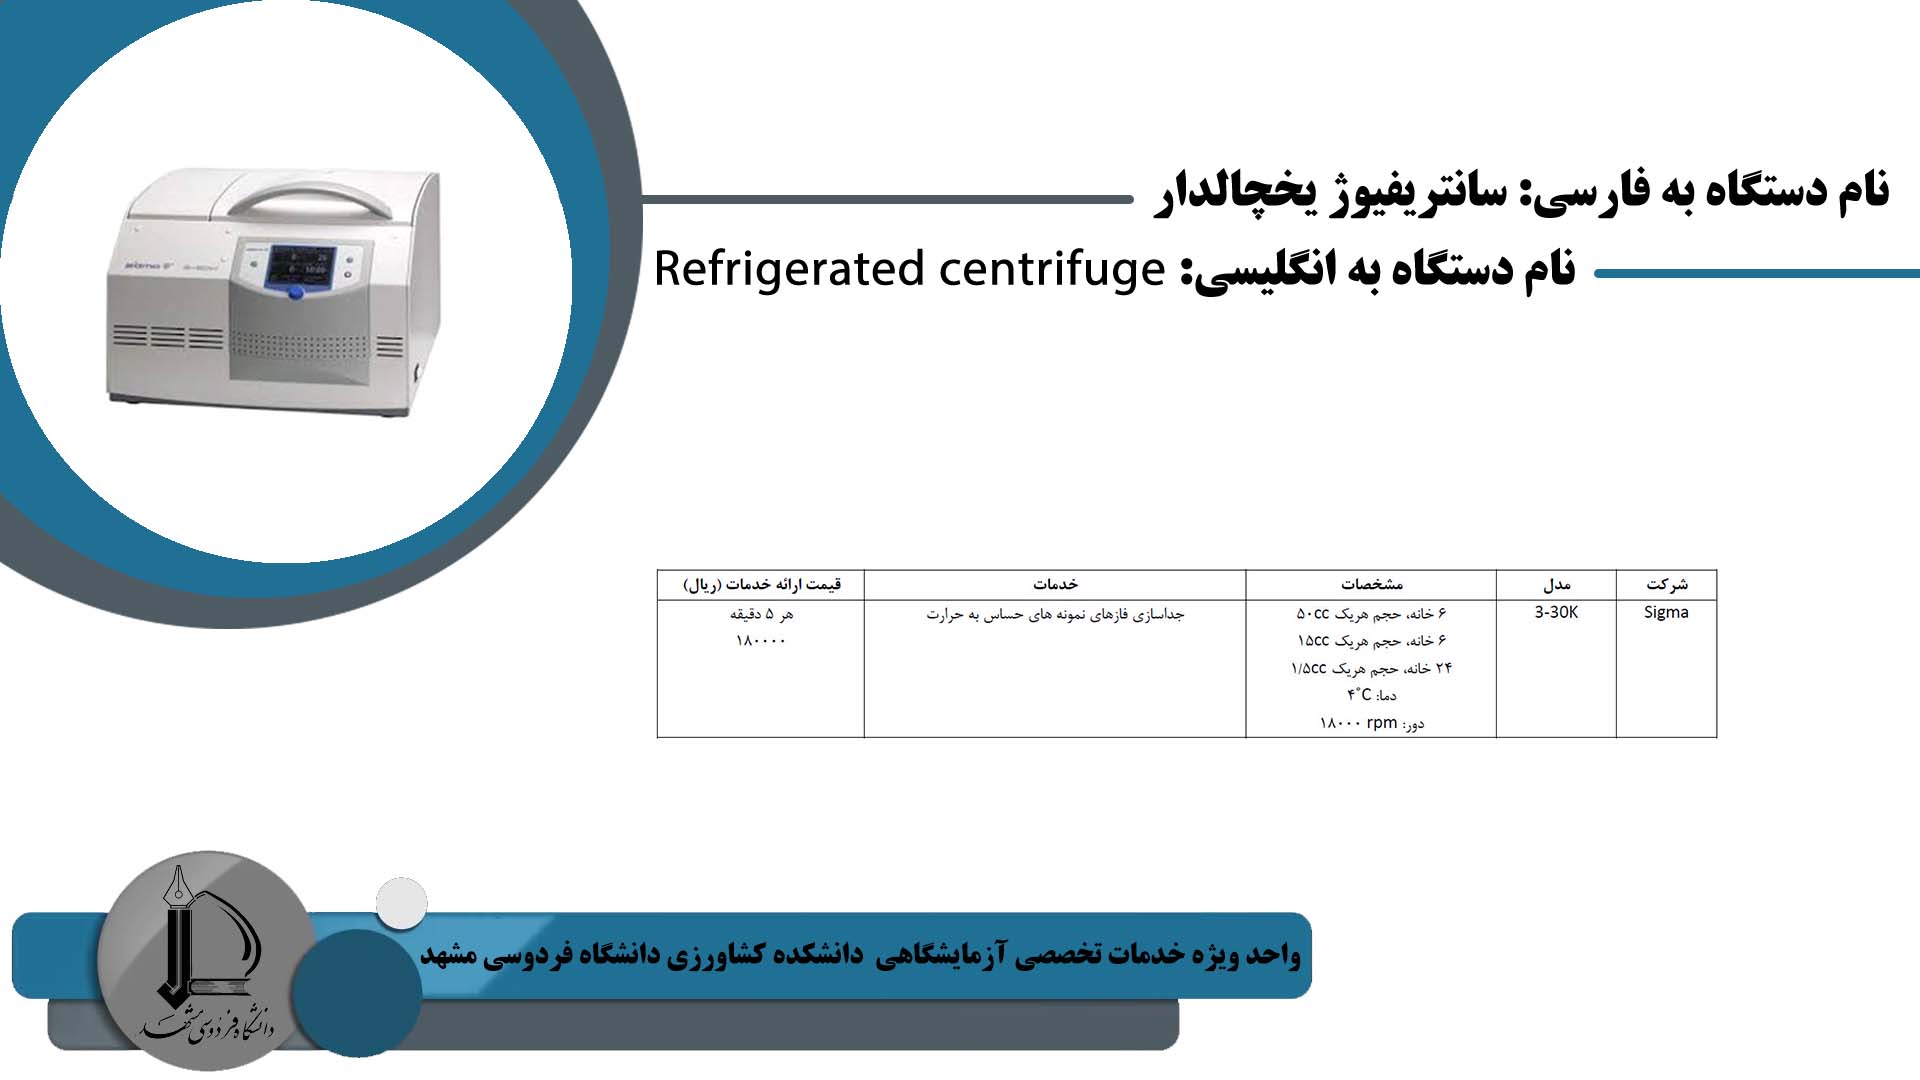 Refrigerated centrifuge